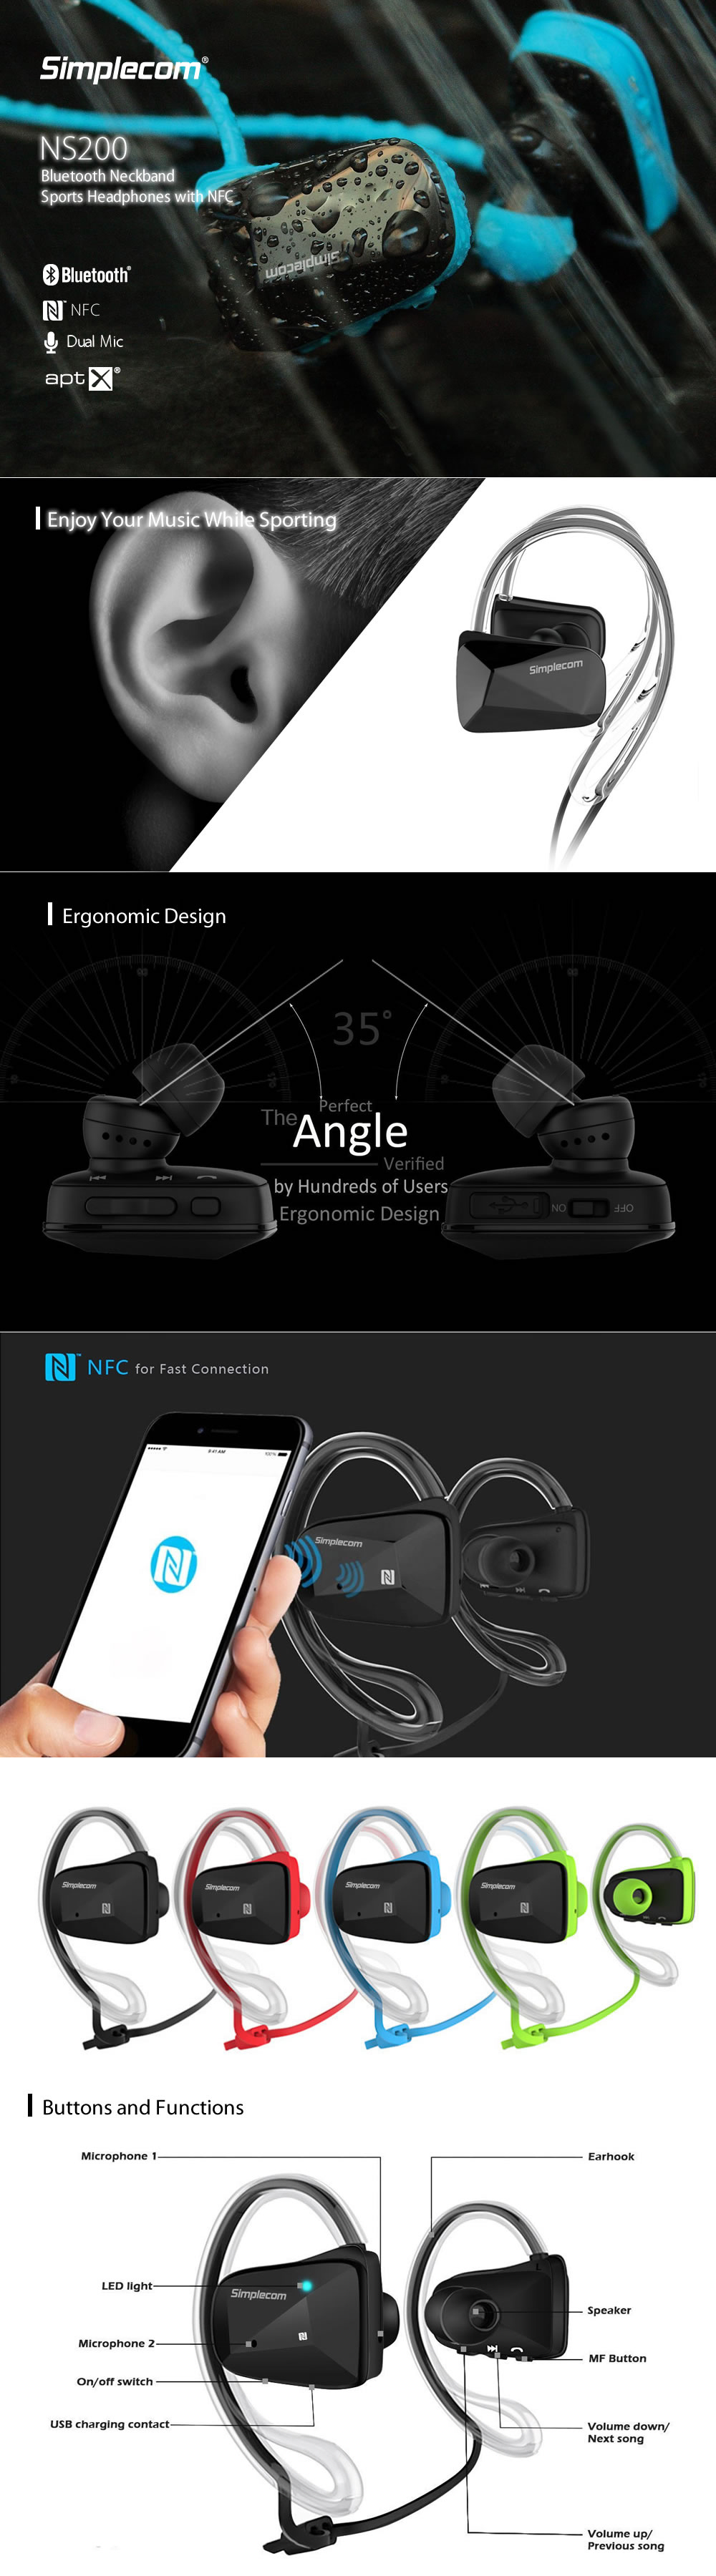 Simplecom-NS200-Bluetooth-Neckband-Sports-Headphones-with-NFC-Green-1